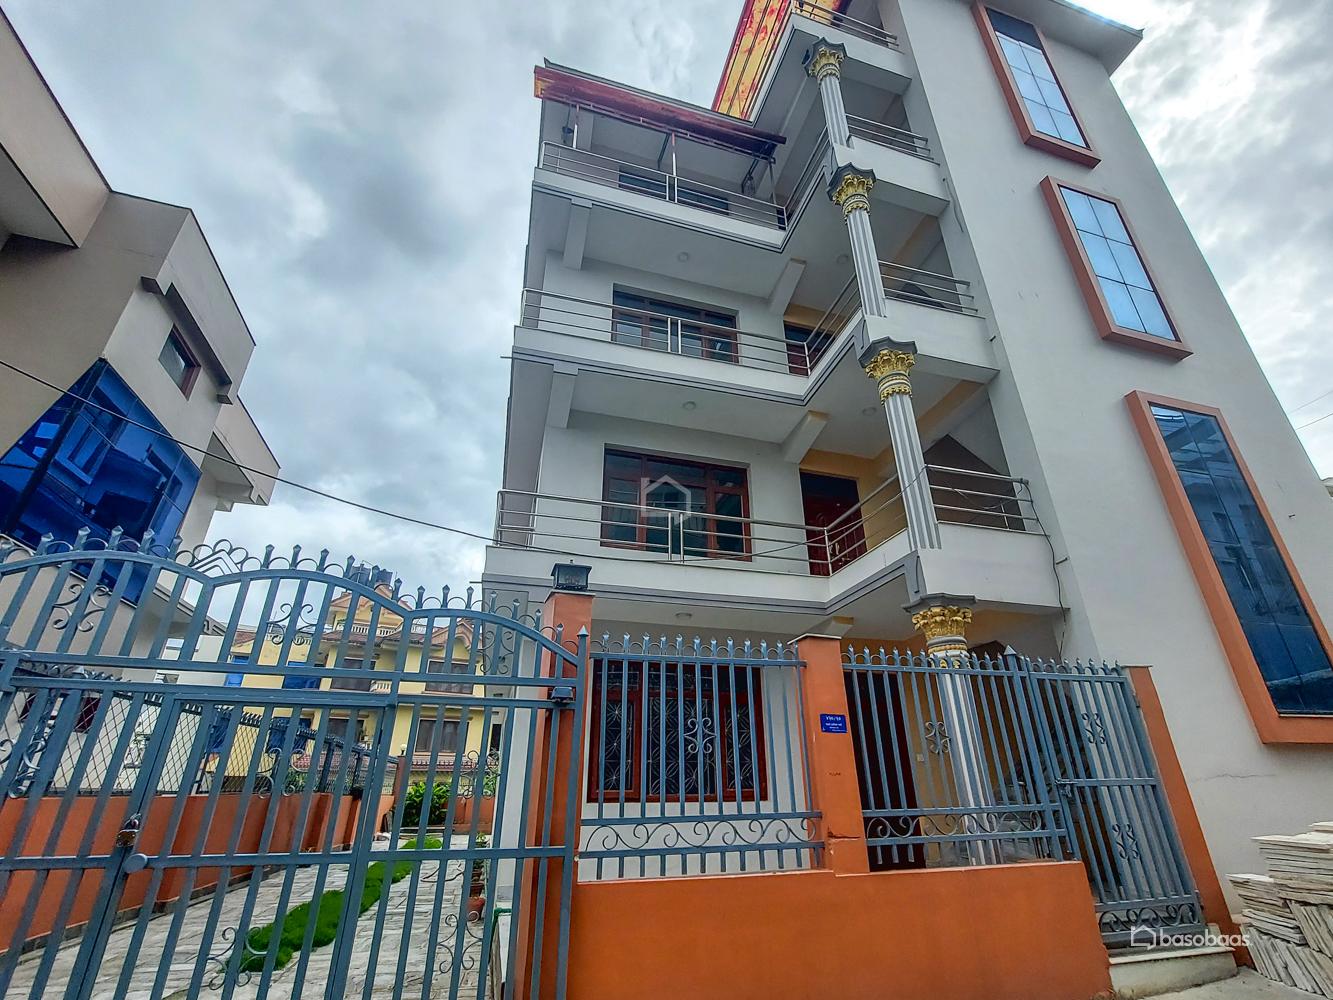 Residental : House for Sale in Satdobato, Lalitpur Image 2